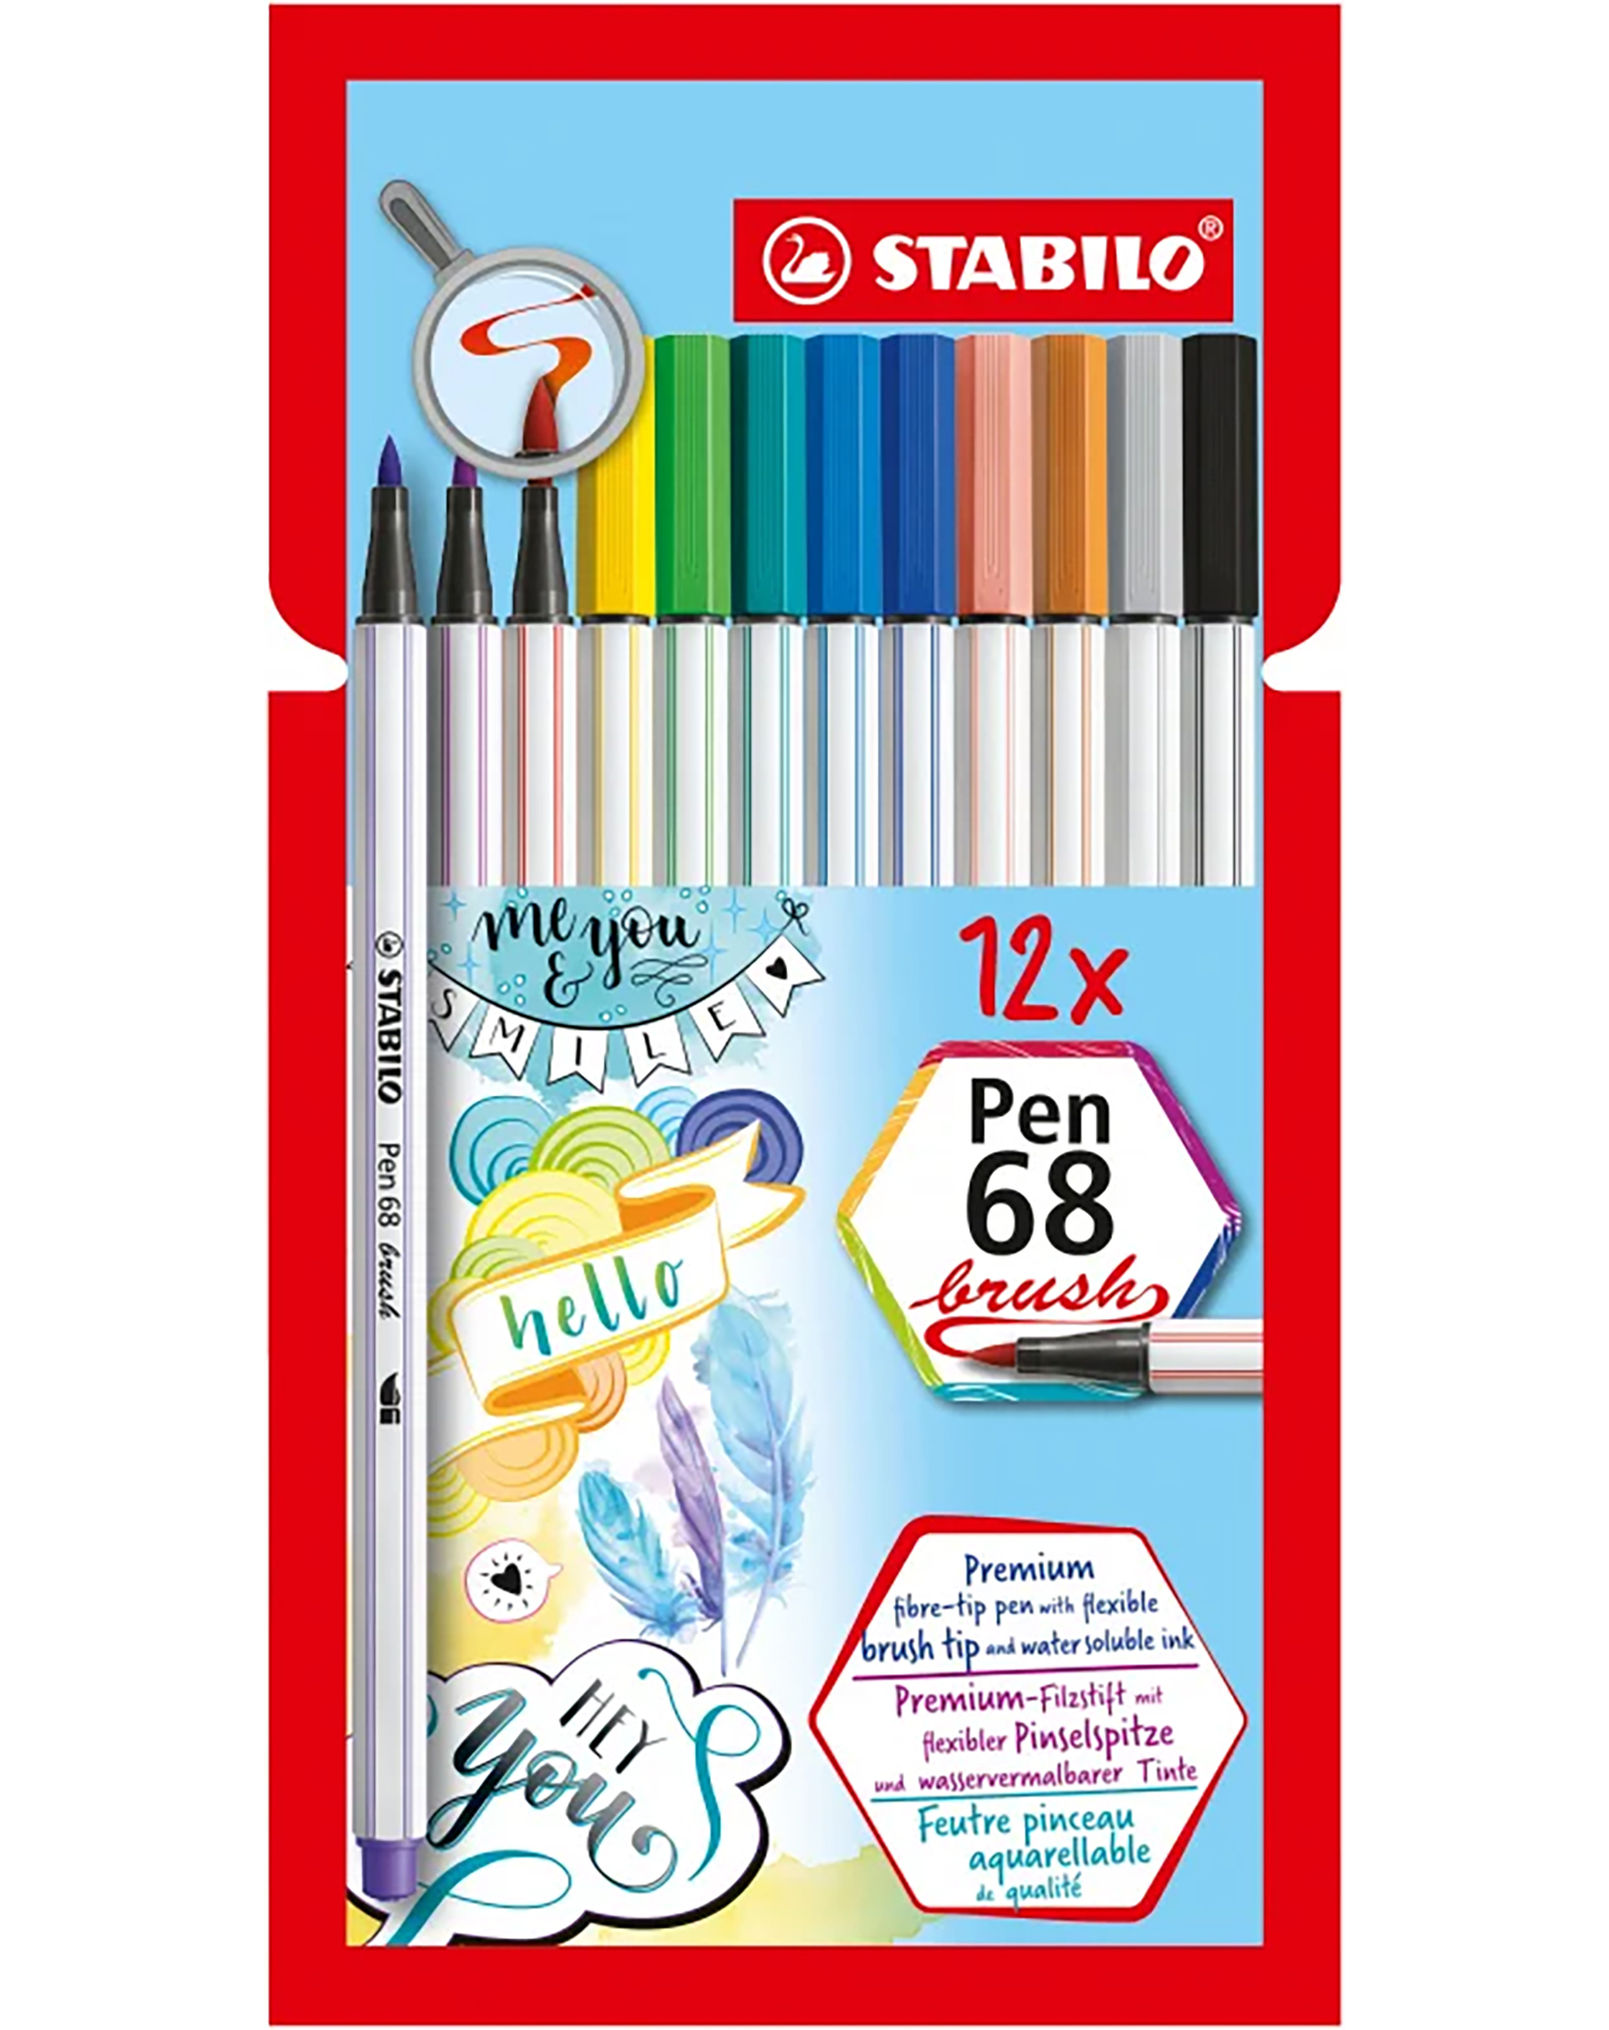 Filzstift STABILO® Pen 68 brush 12er-Pack kaufen